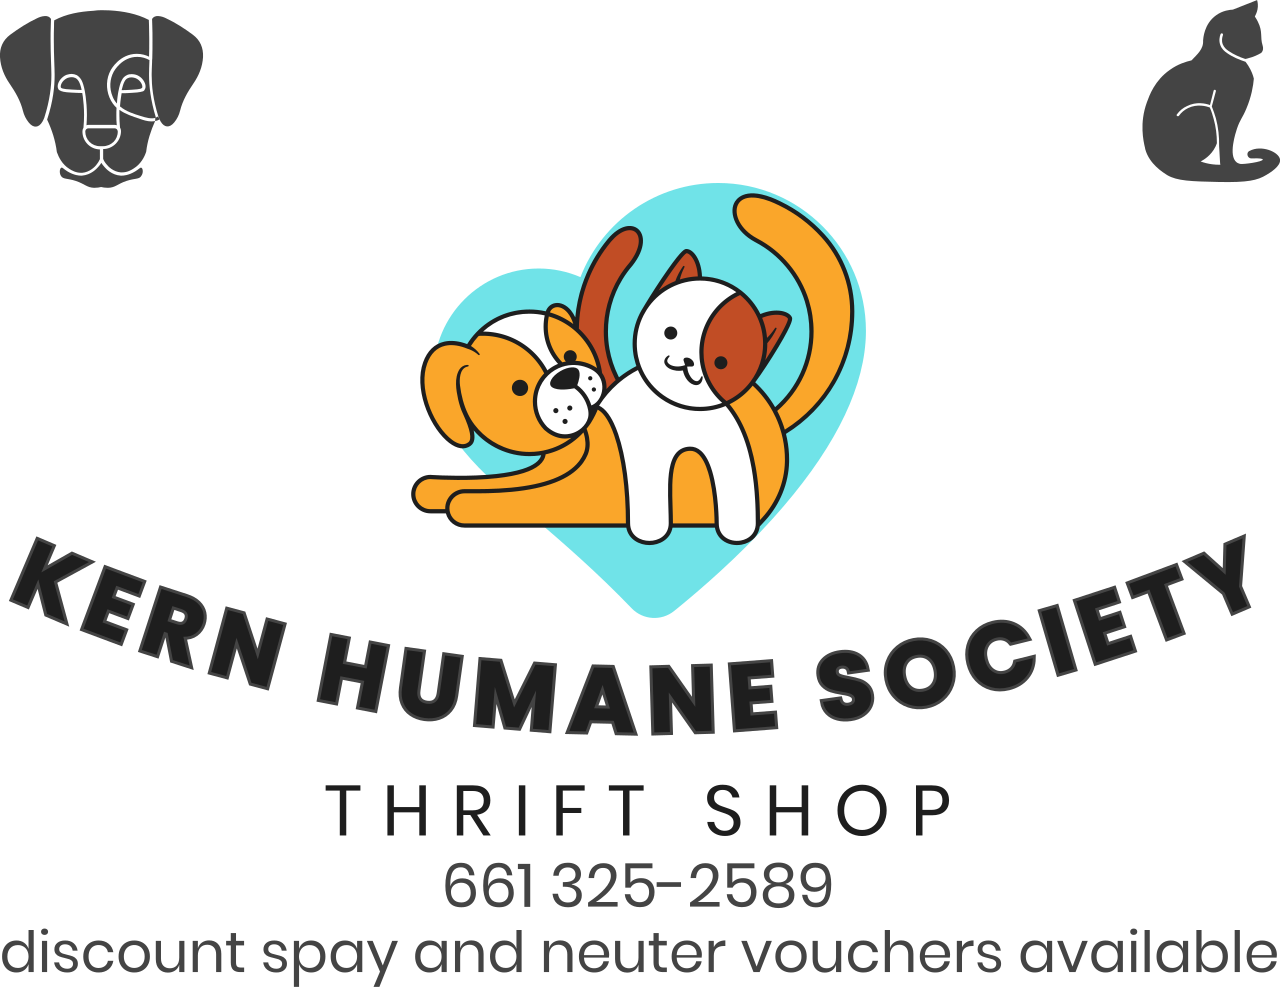 Kern Humane Society's web page